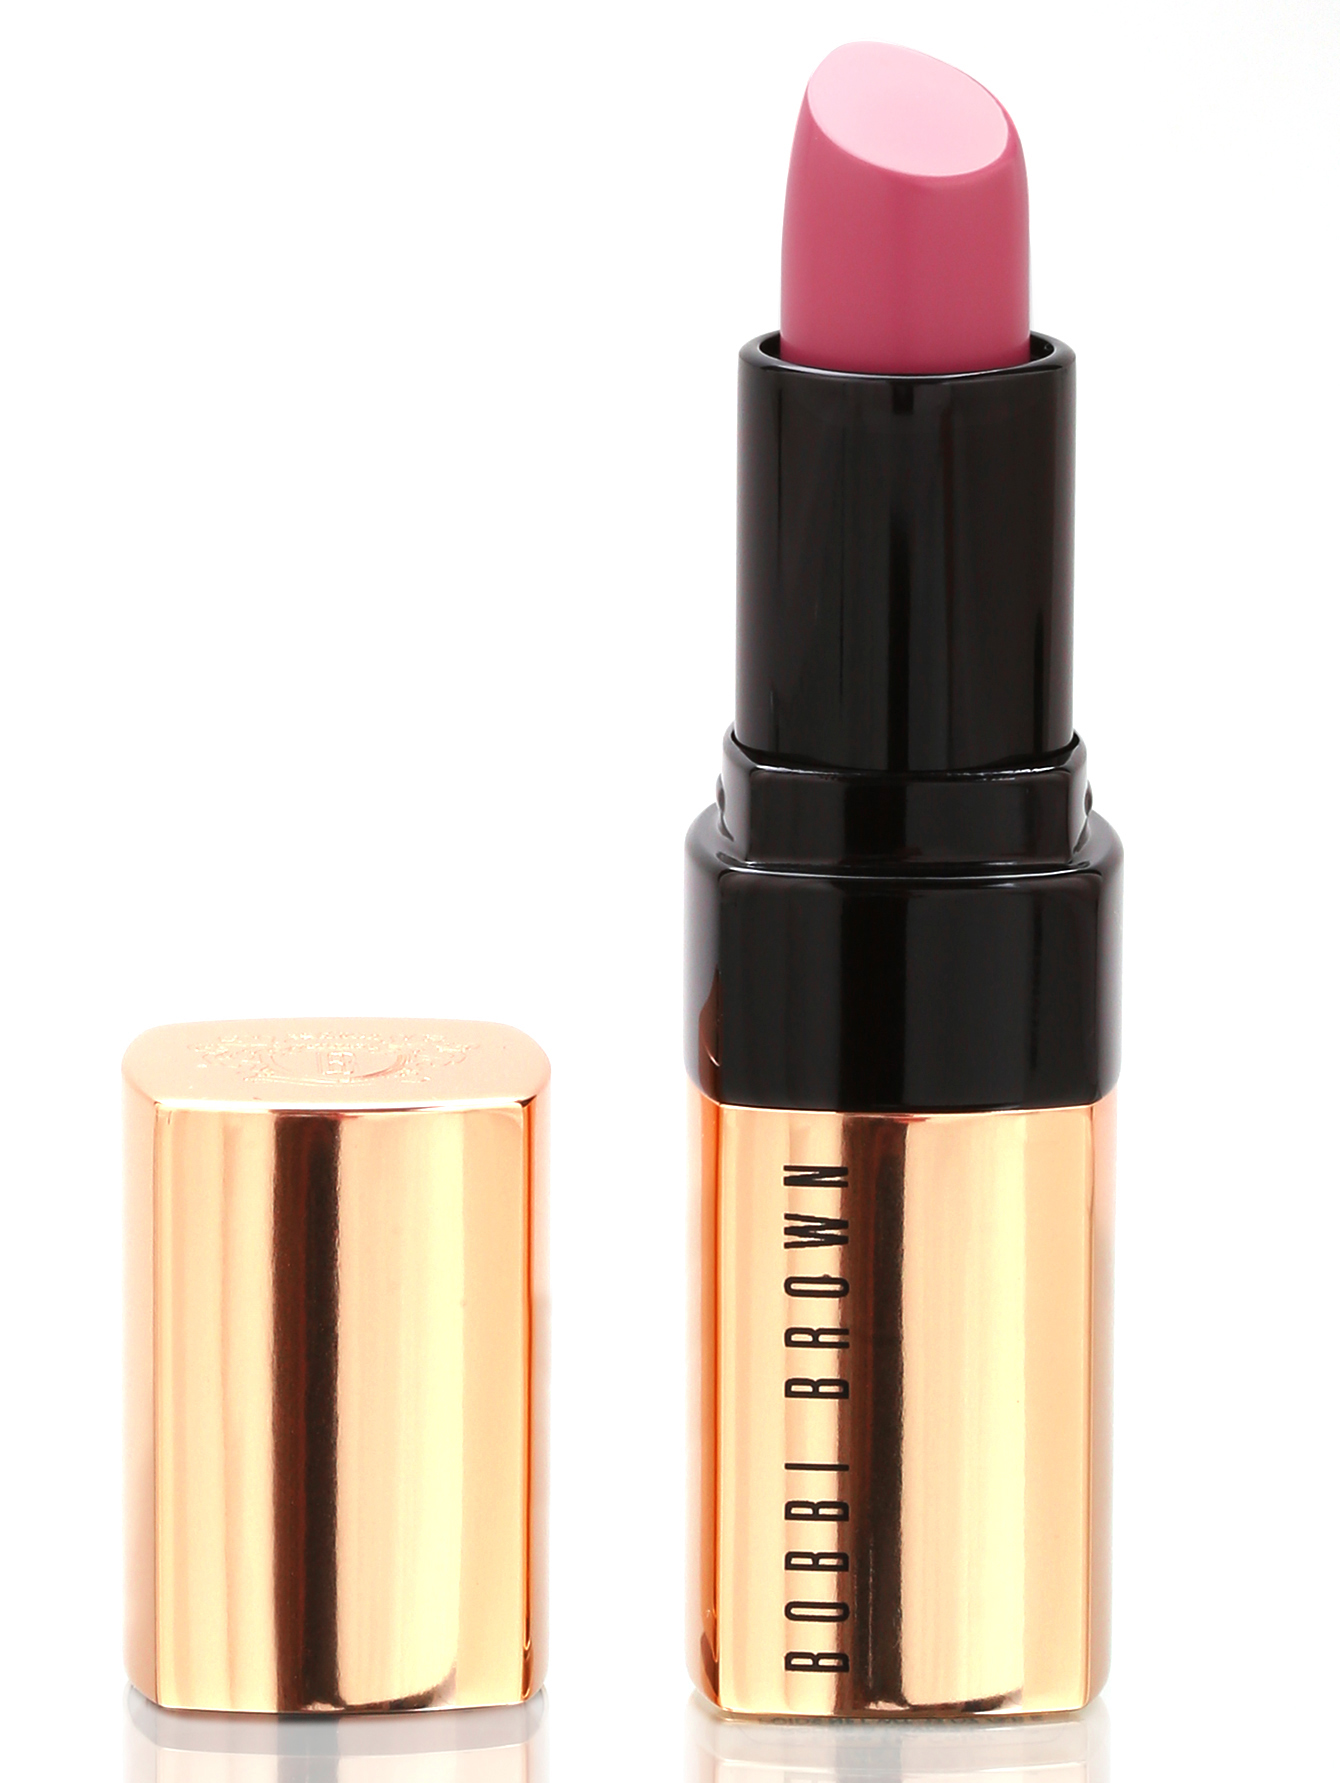 Помада - Posh Pink, Luxe Lip Color - Общий вид